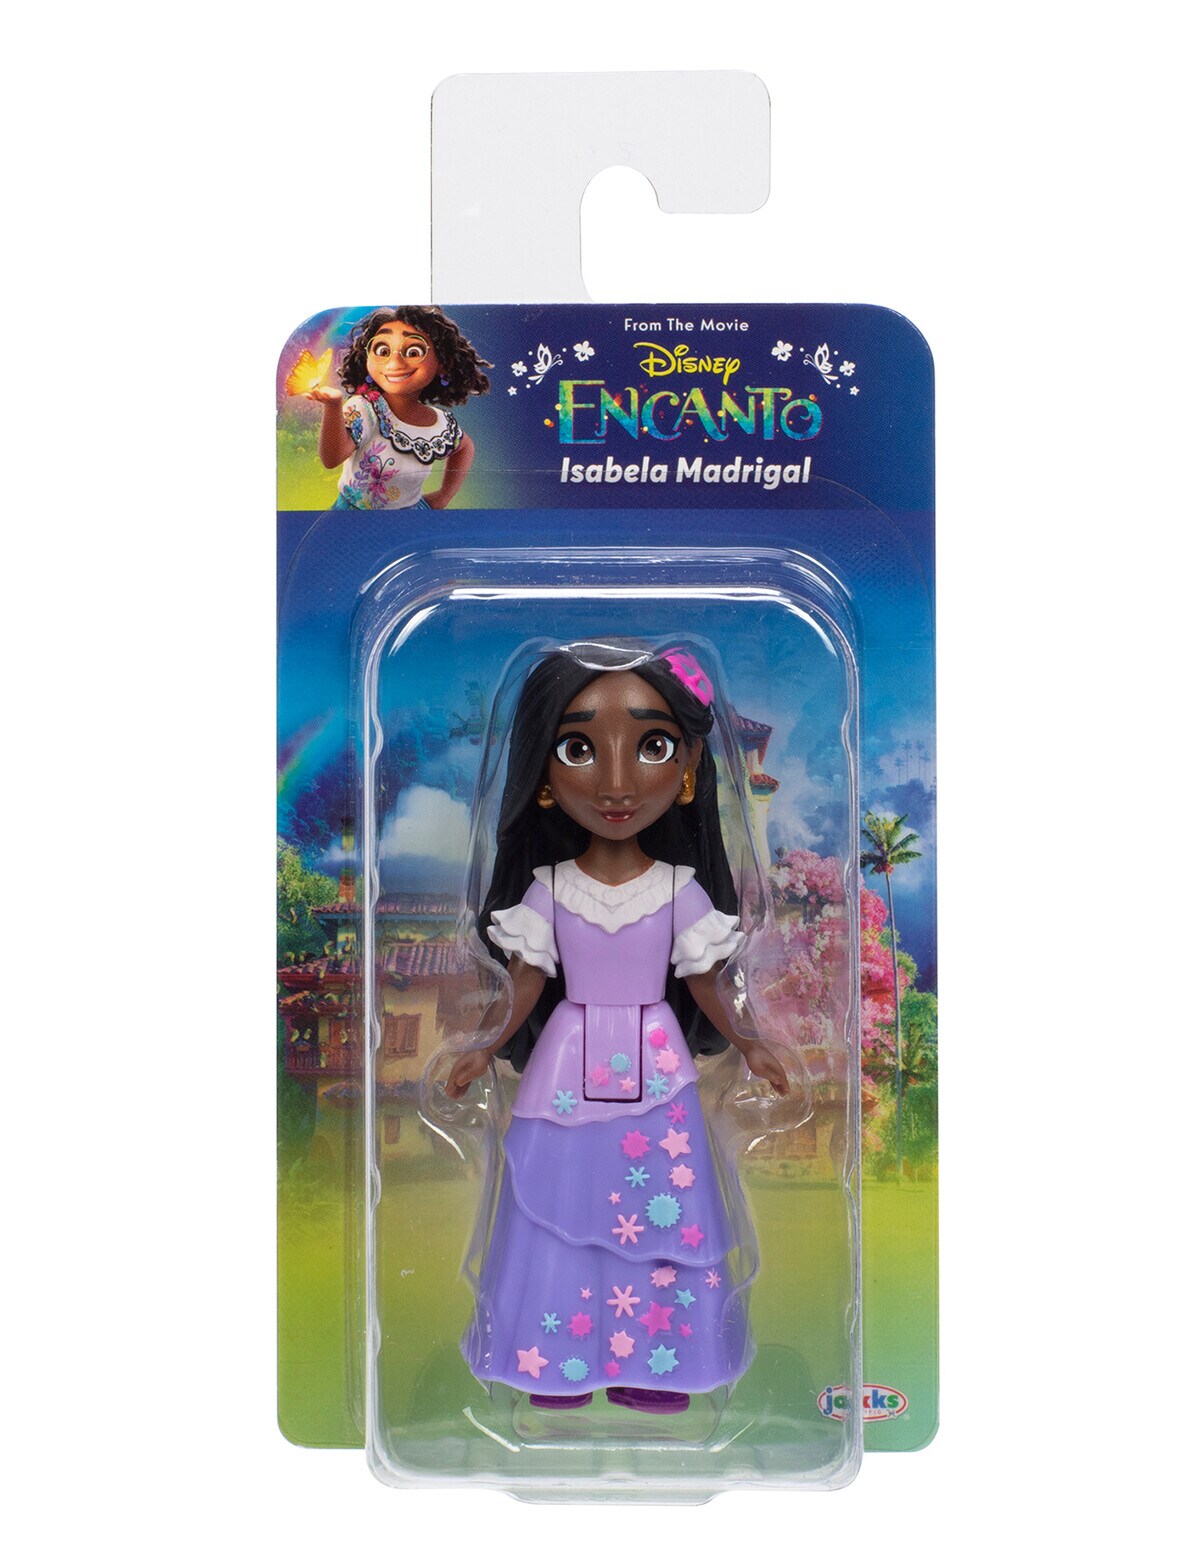 Disney's Encanto 2 Doll Set